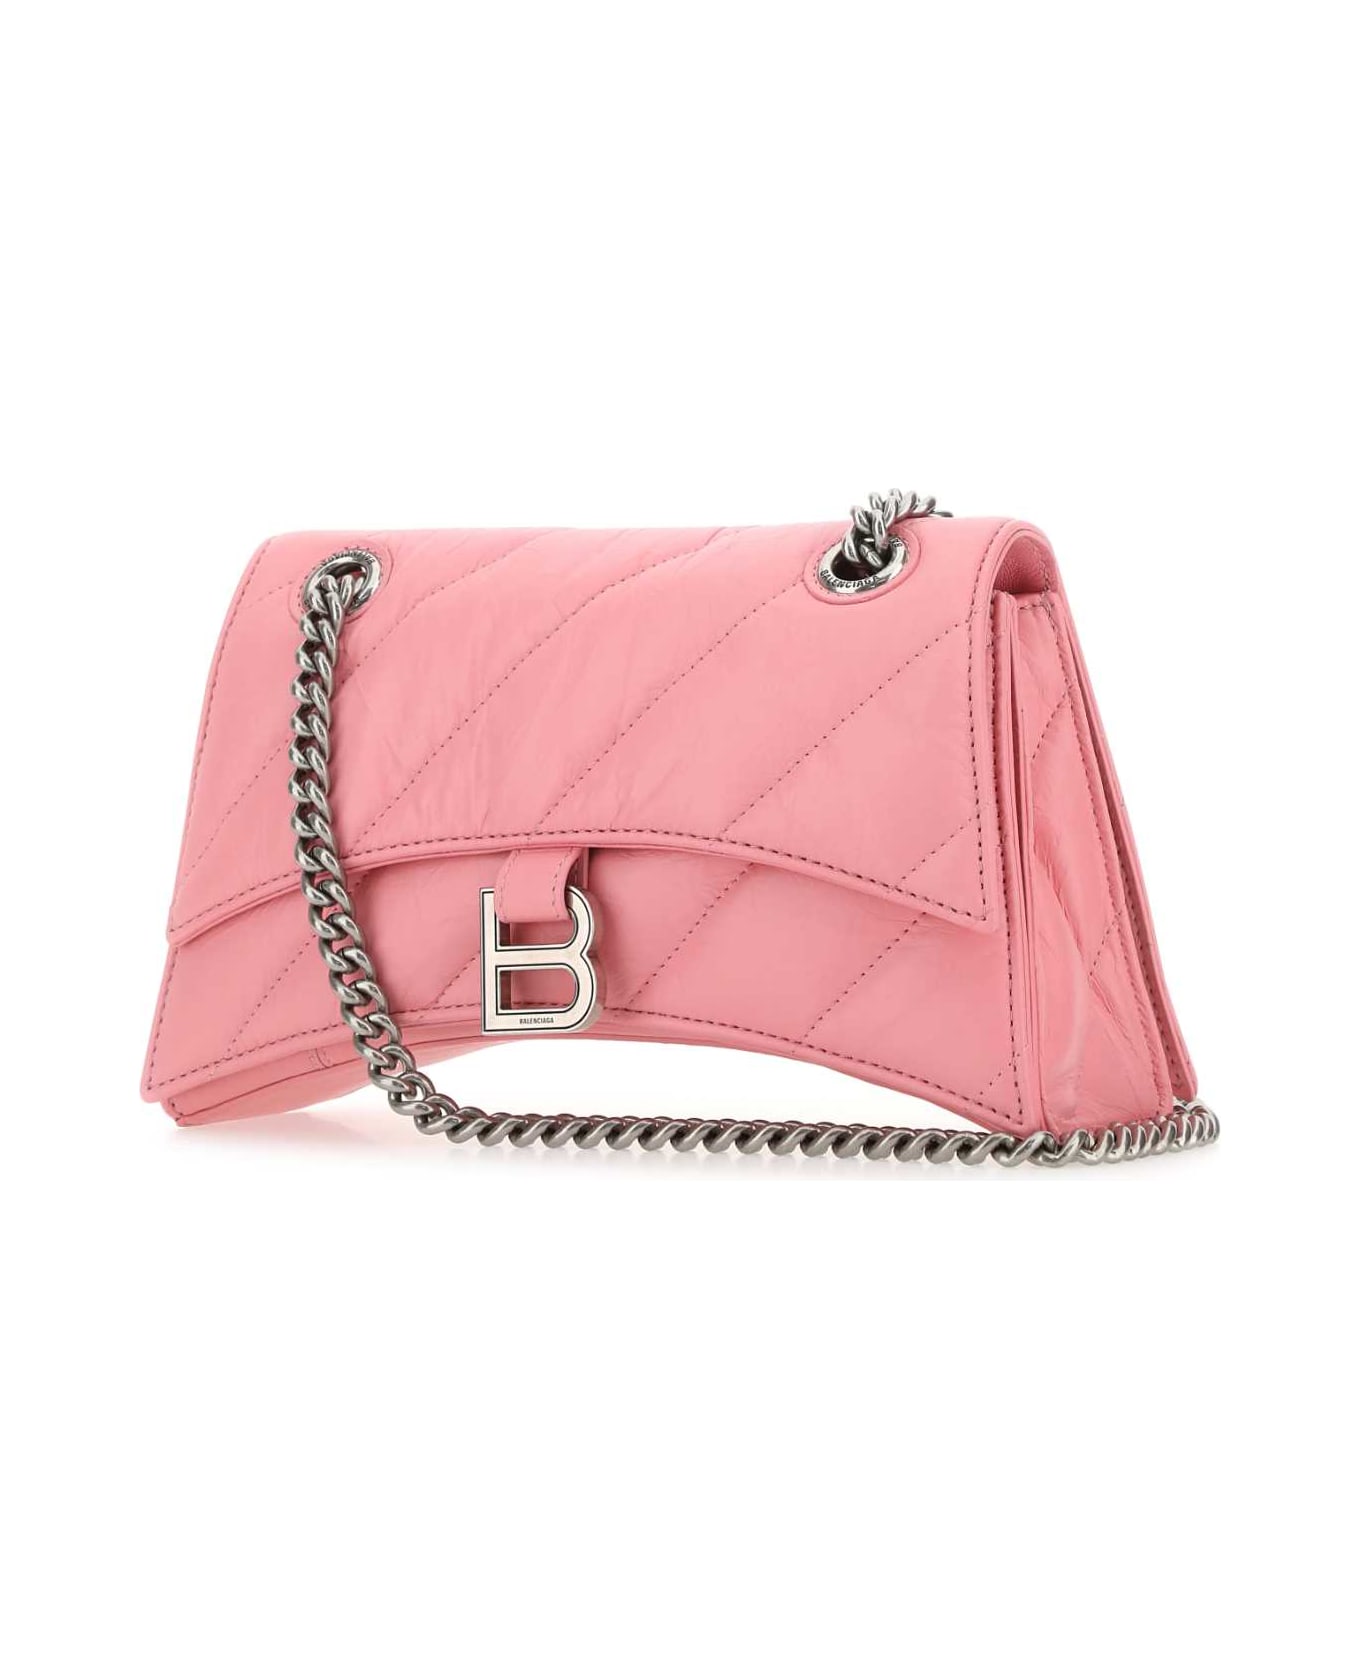 Balenciaga Pink Leather Crush S Shoulder Bag - 5812